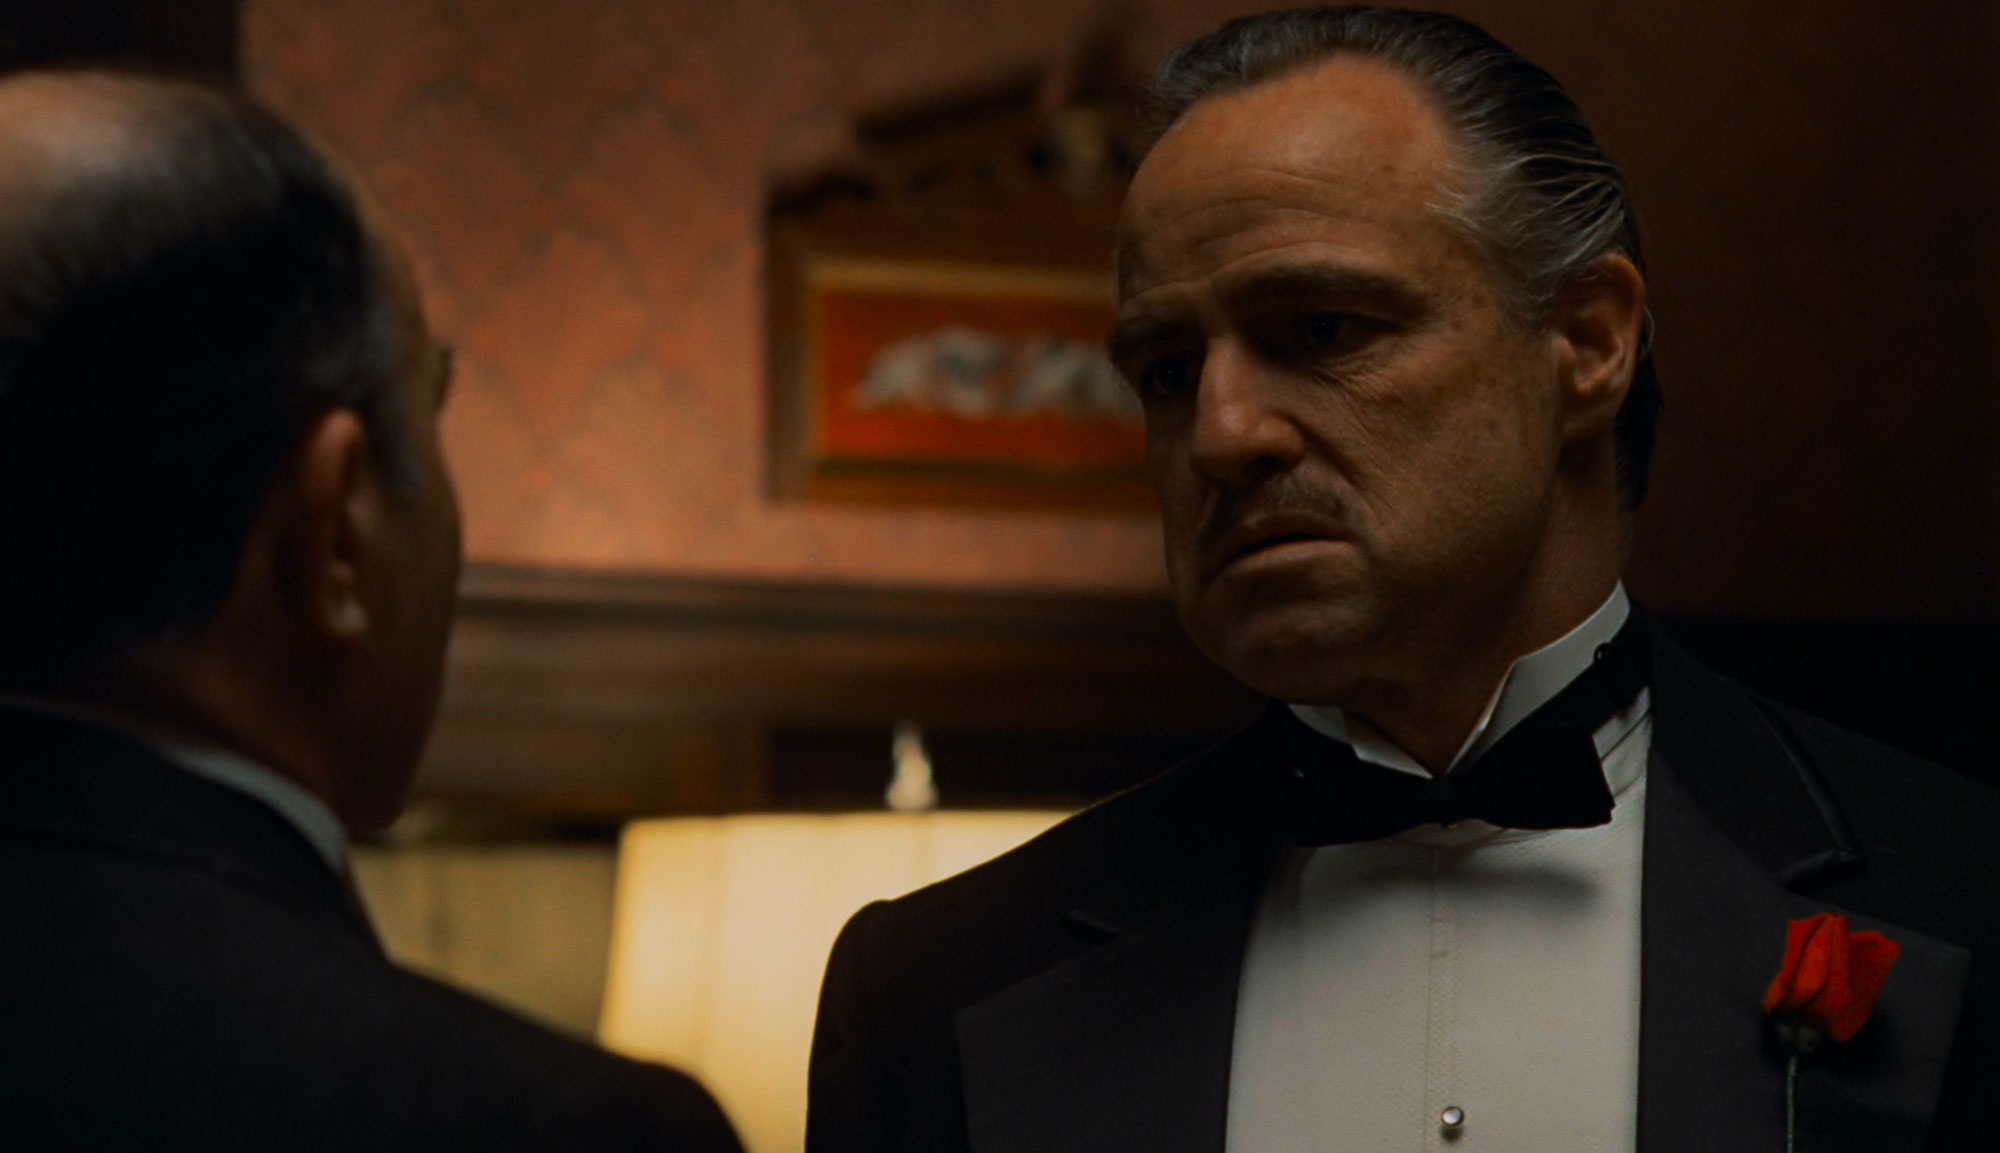 Marlon Brando in "The Godfather"